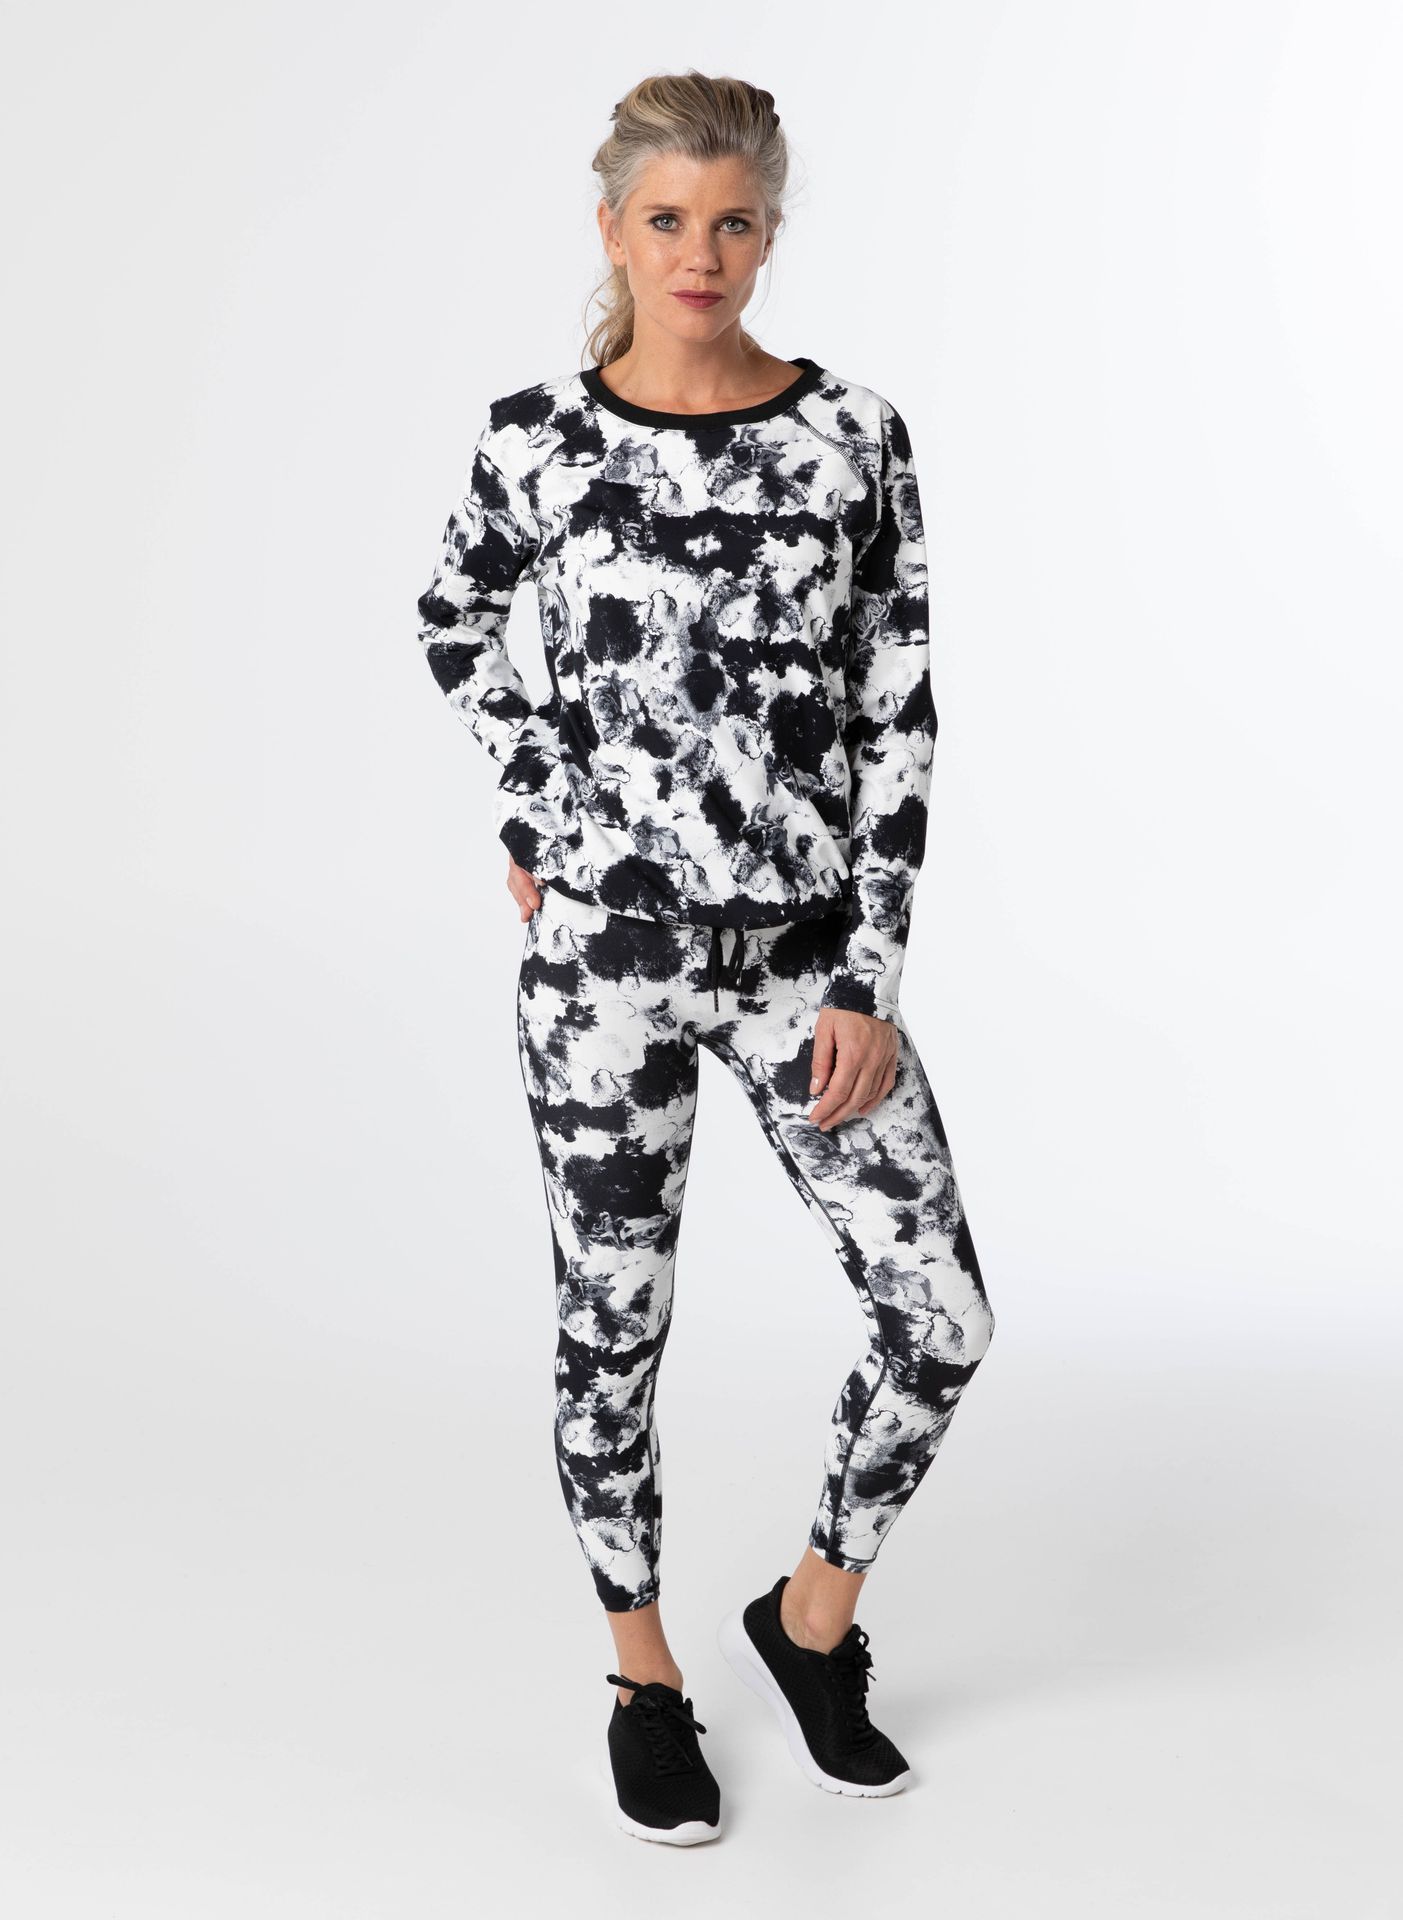 Norah Jumper - Activewear black/white 211901-031